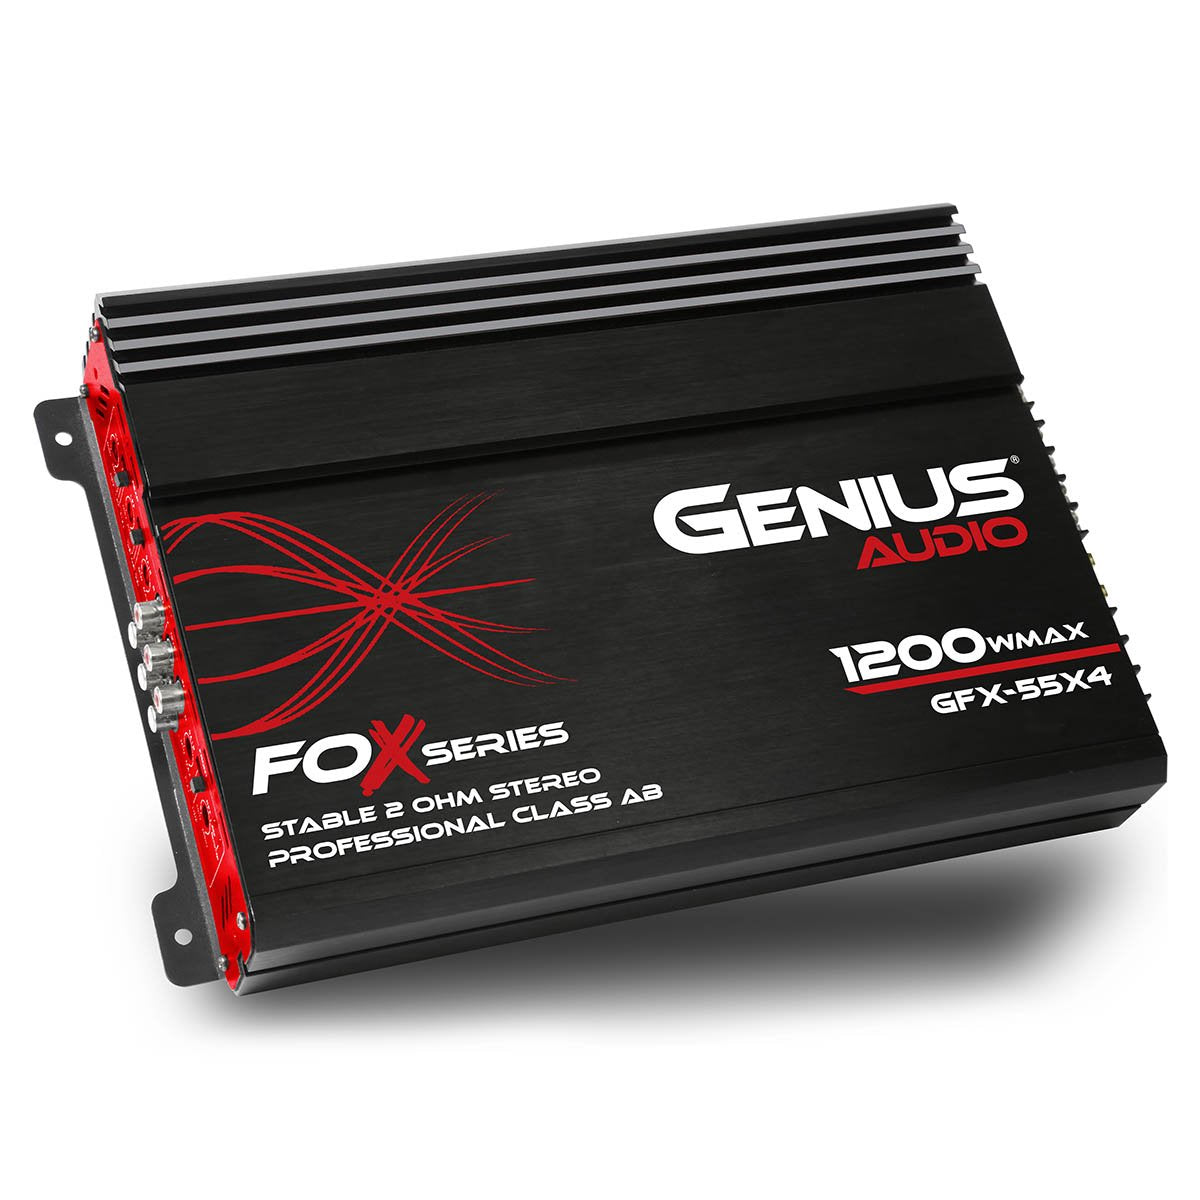 Genius GFX-55X4 1200 Watts-Max Car Amplifier 4-Channels